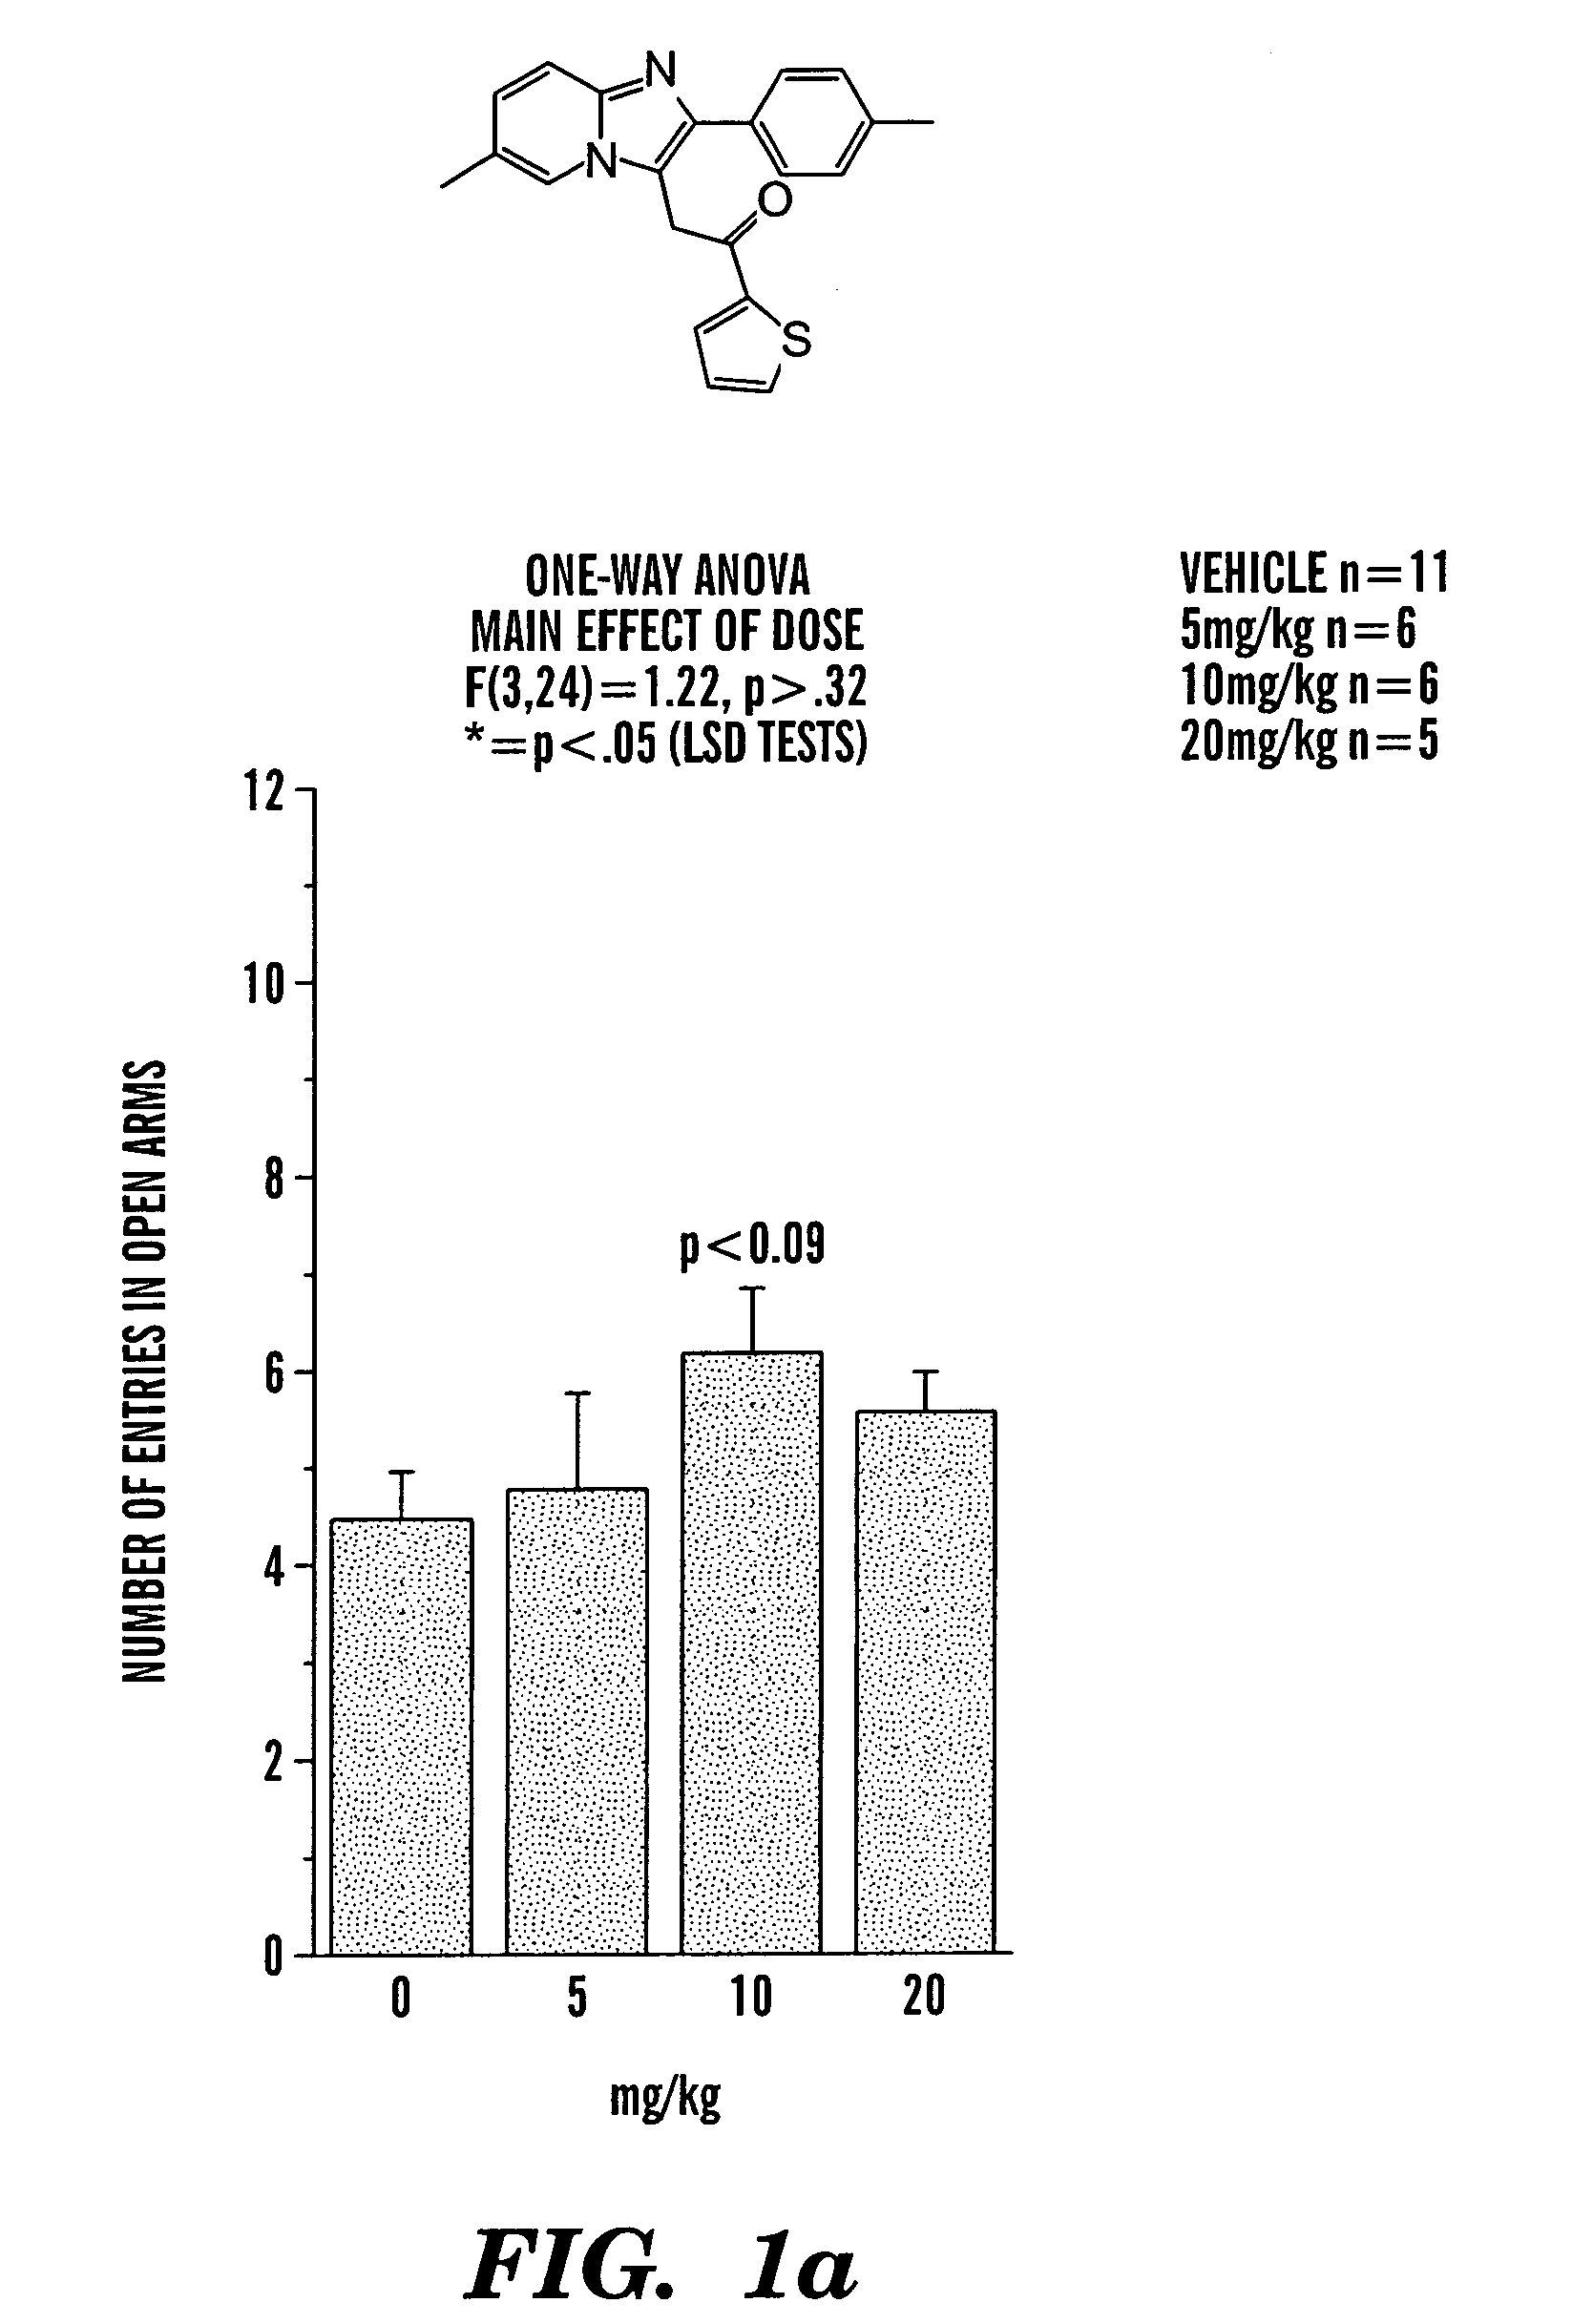 Imidazo[1,2-a] pyridine anxiolytics